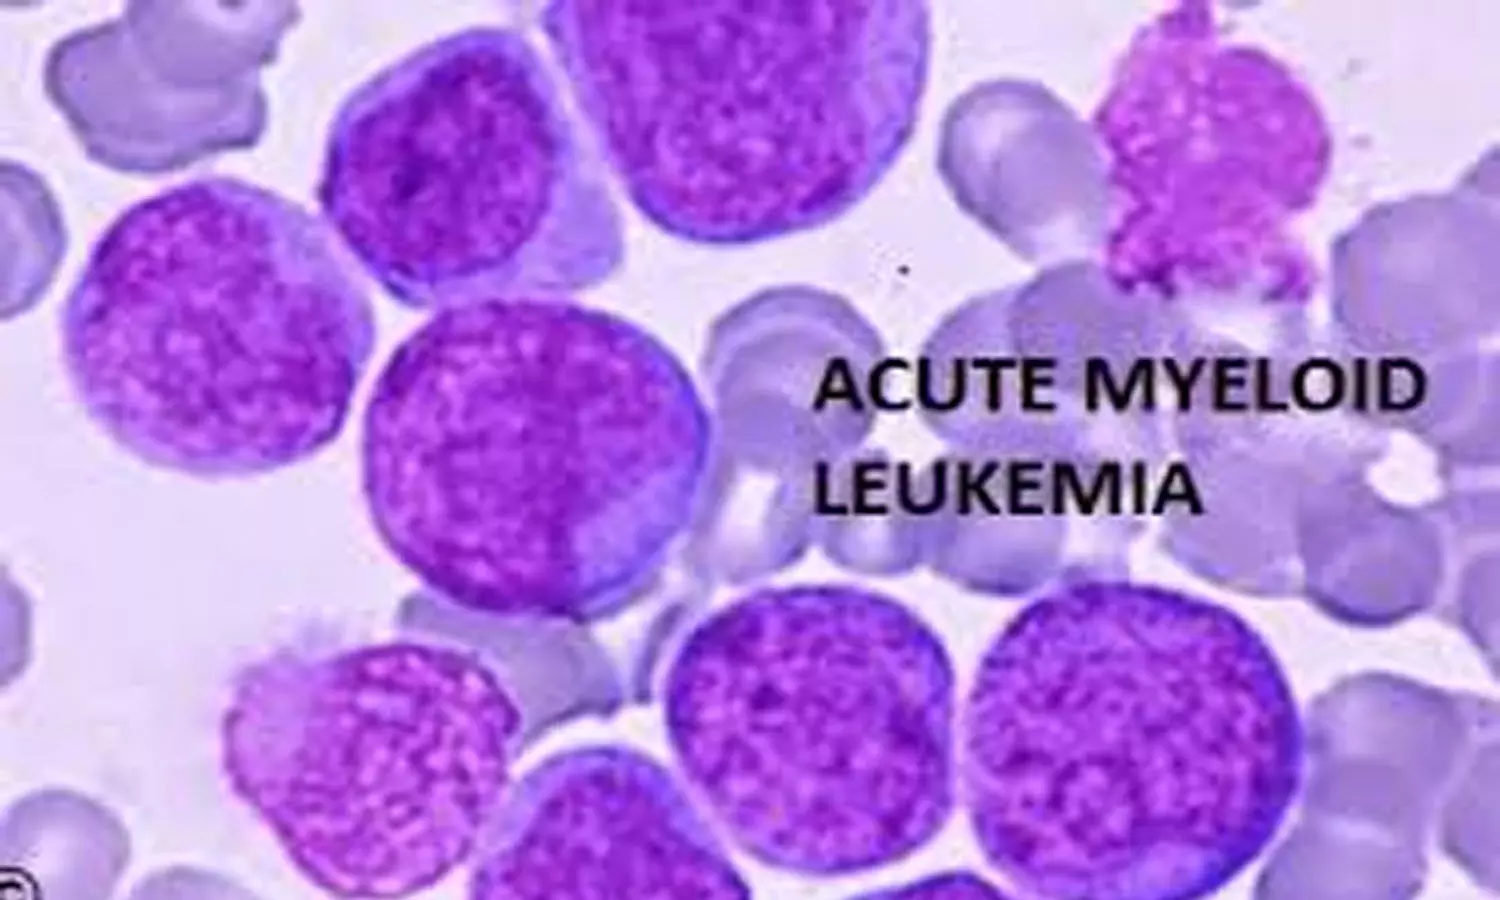 Metoclopramide inhibits proliferation of leukemia stem cells, finds study